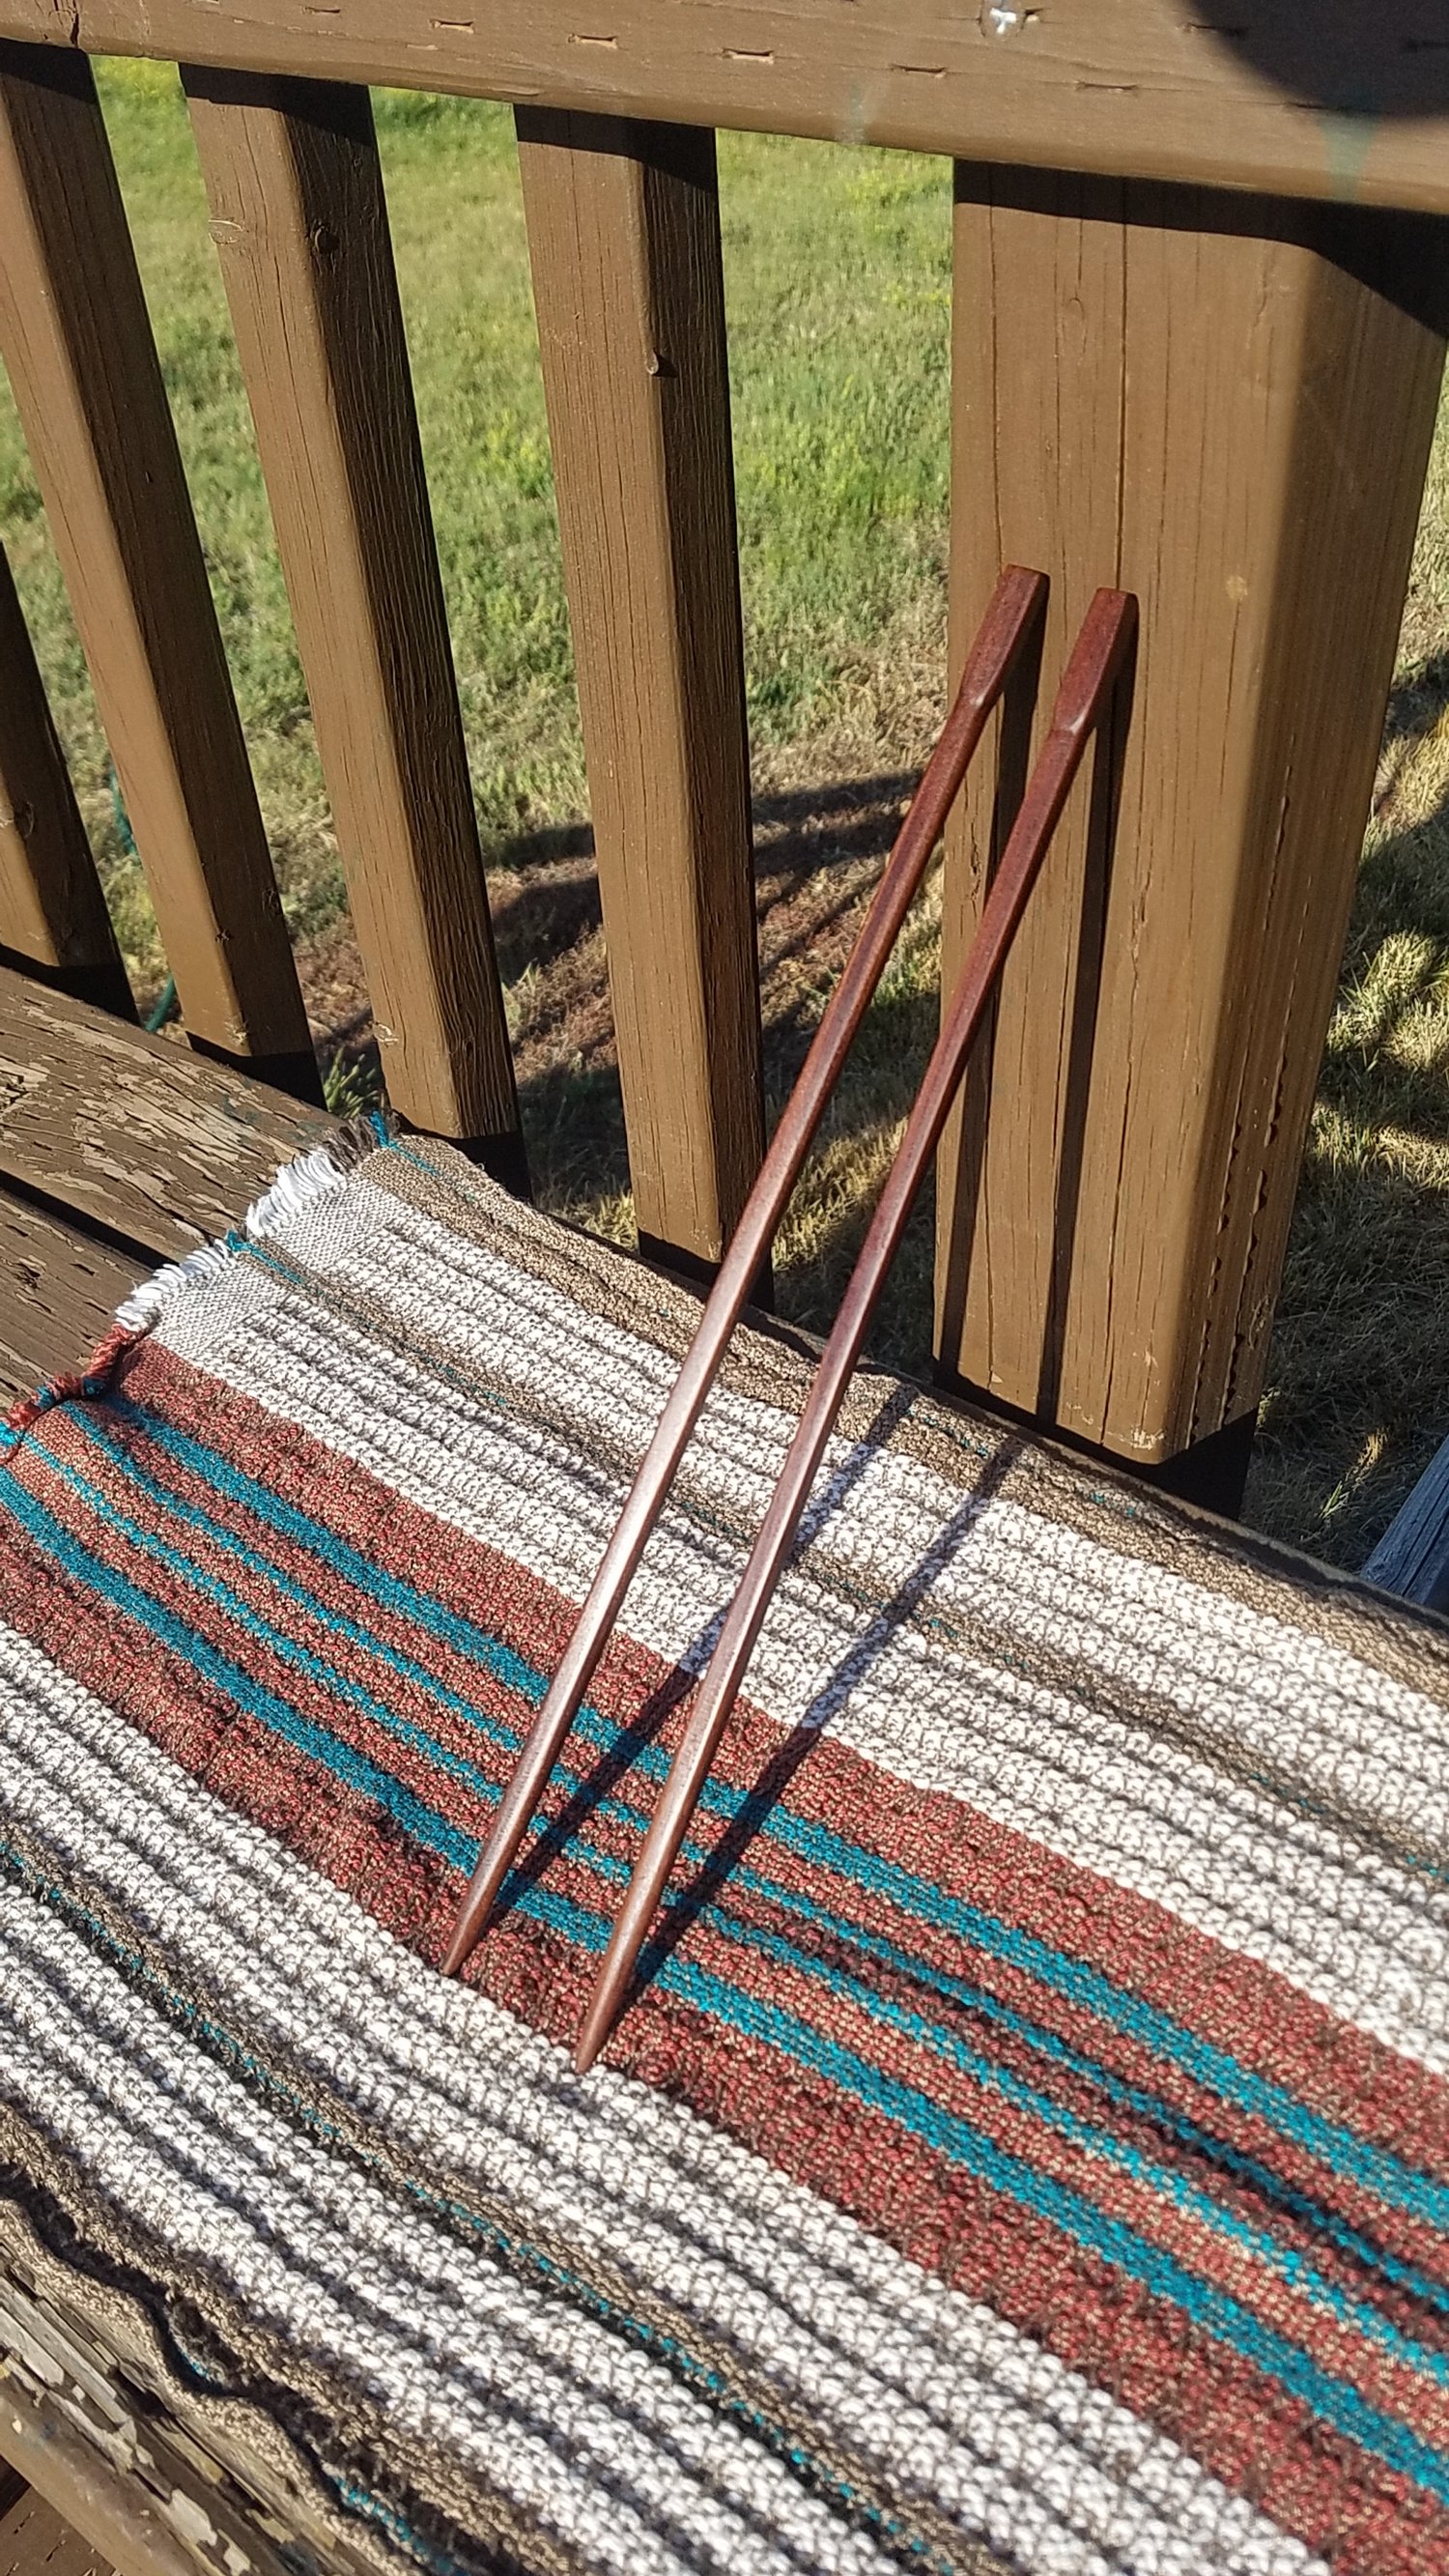  Rosewood knitting needles, square shaft, 14” 